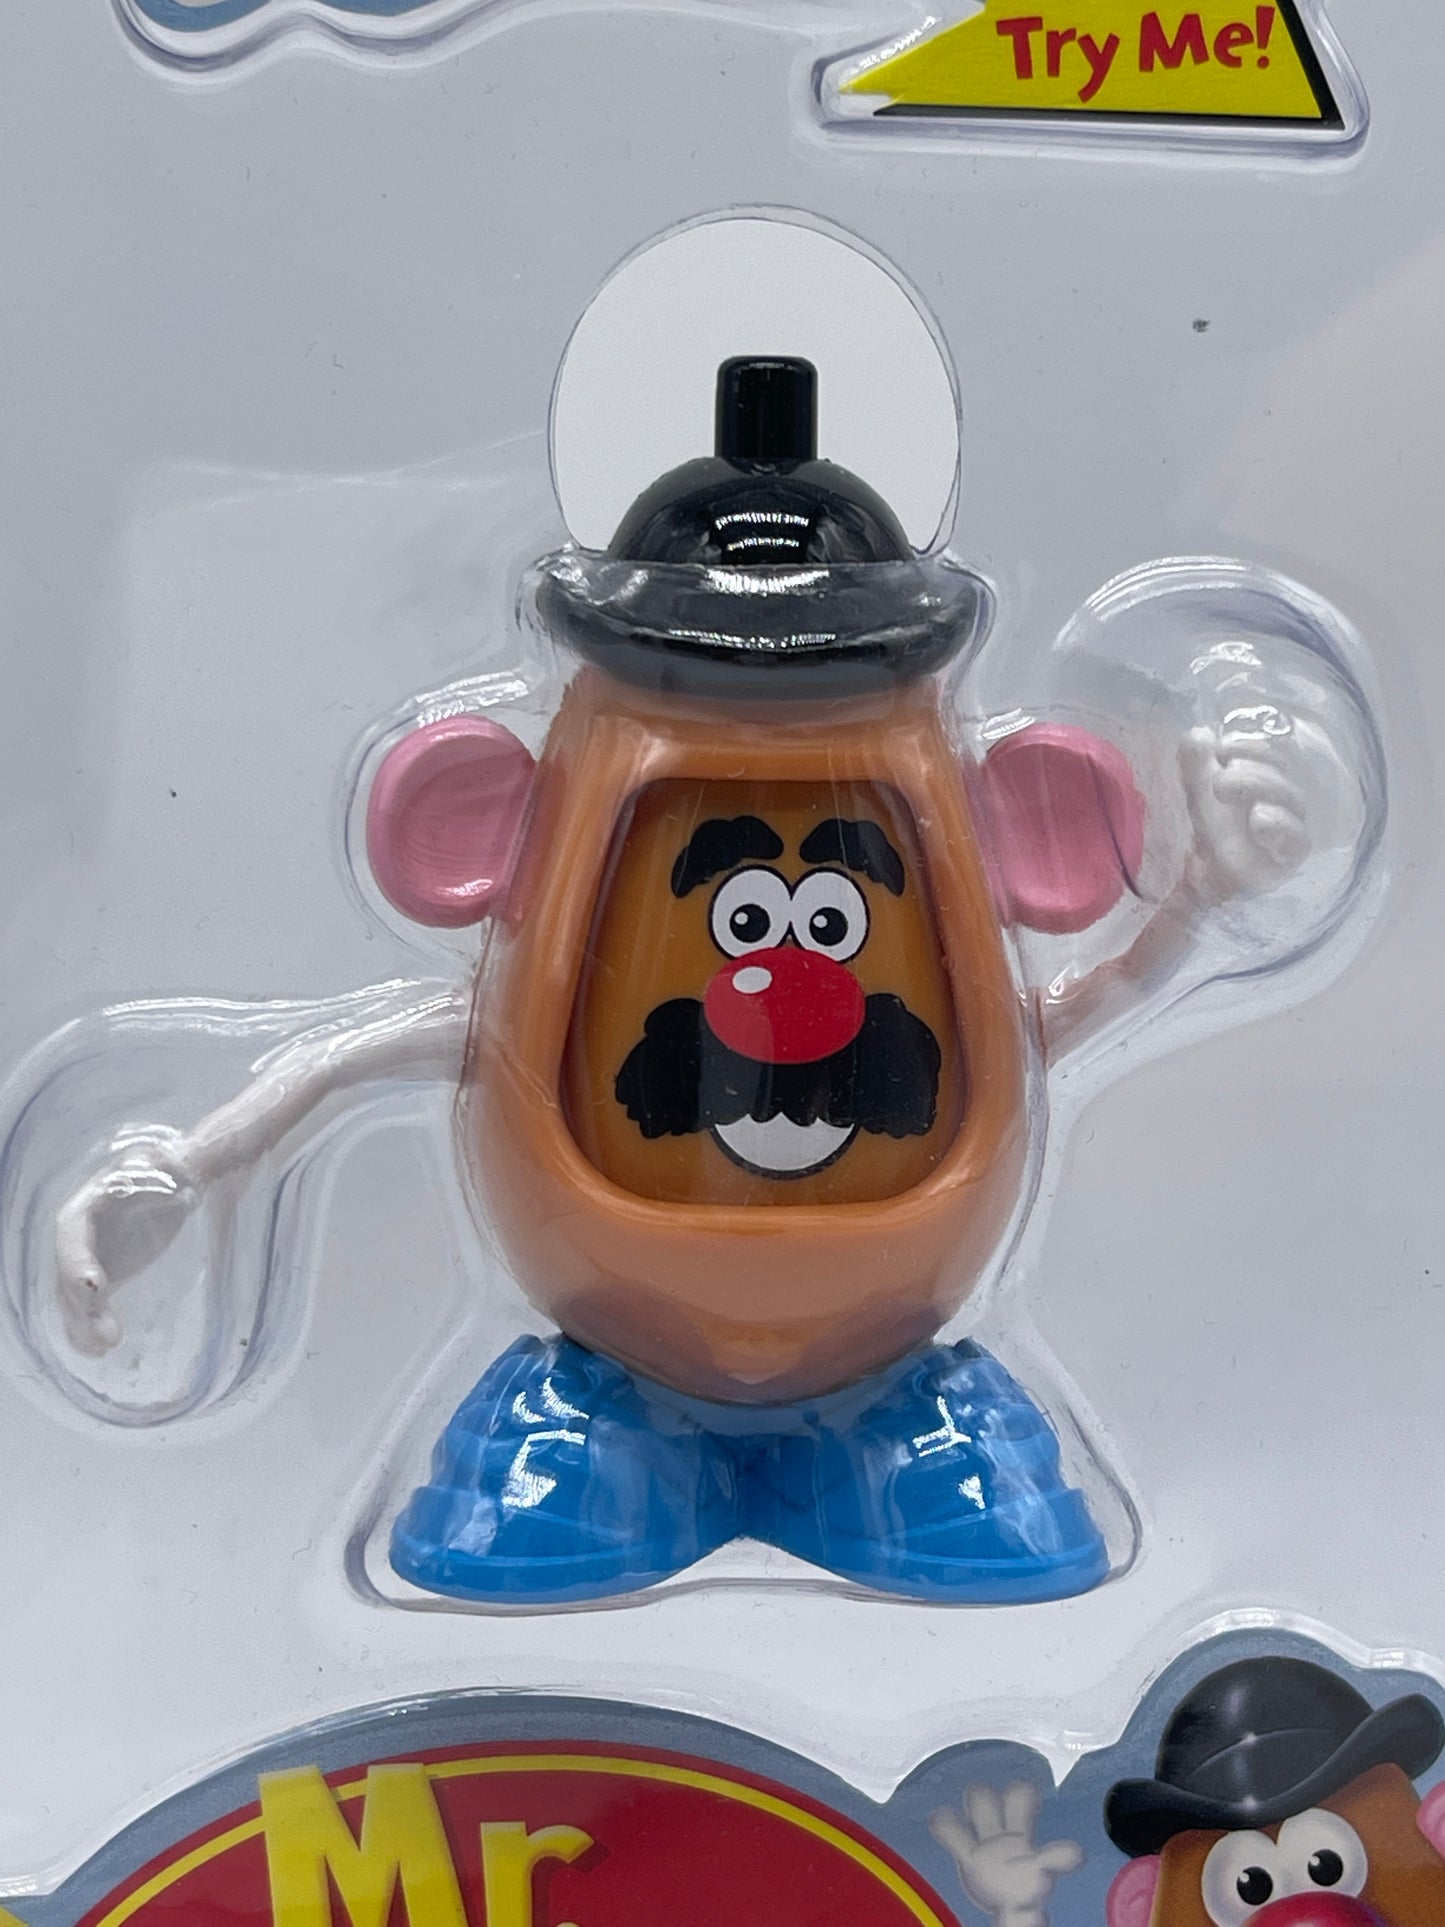 Worlds Smallest - Mr. Potato Head 3 Faces Hasbro Playskool 2019